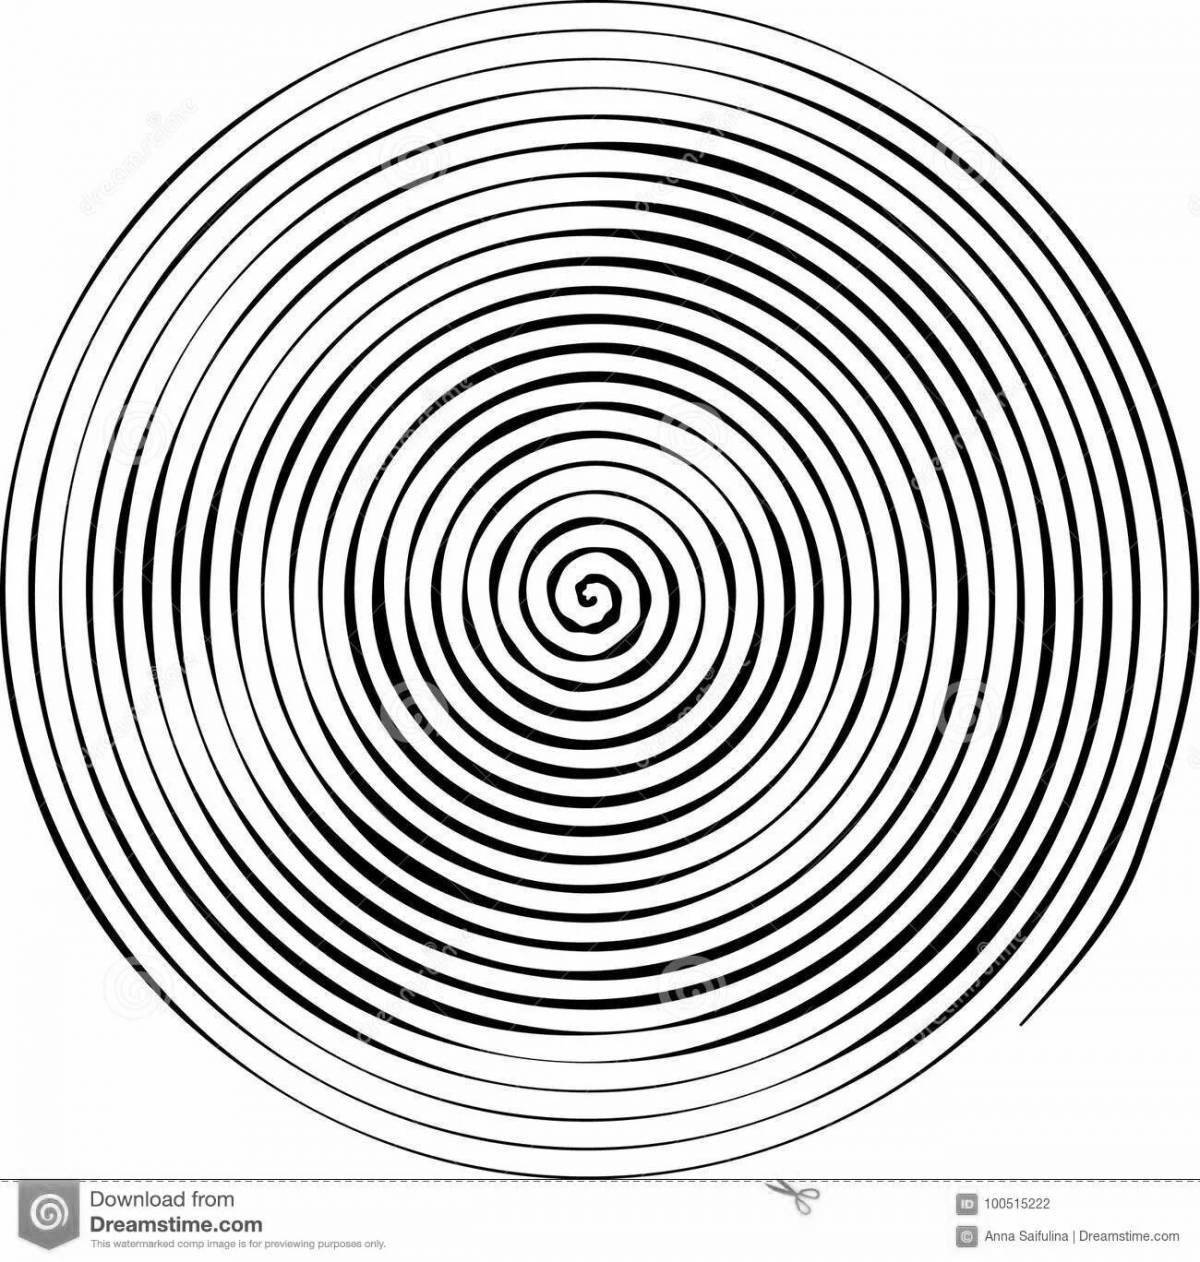 Fascinating circular pattern spiral coloring book